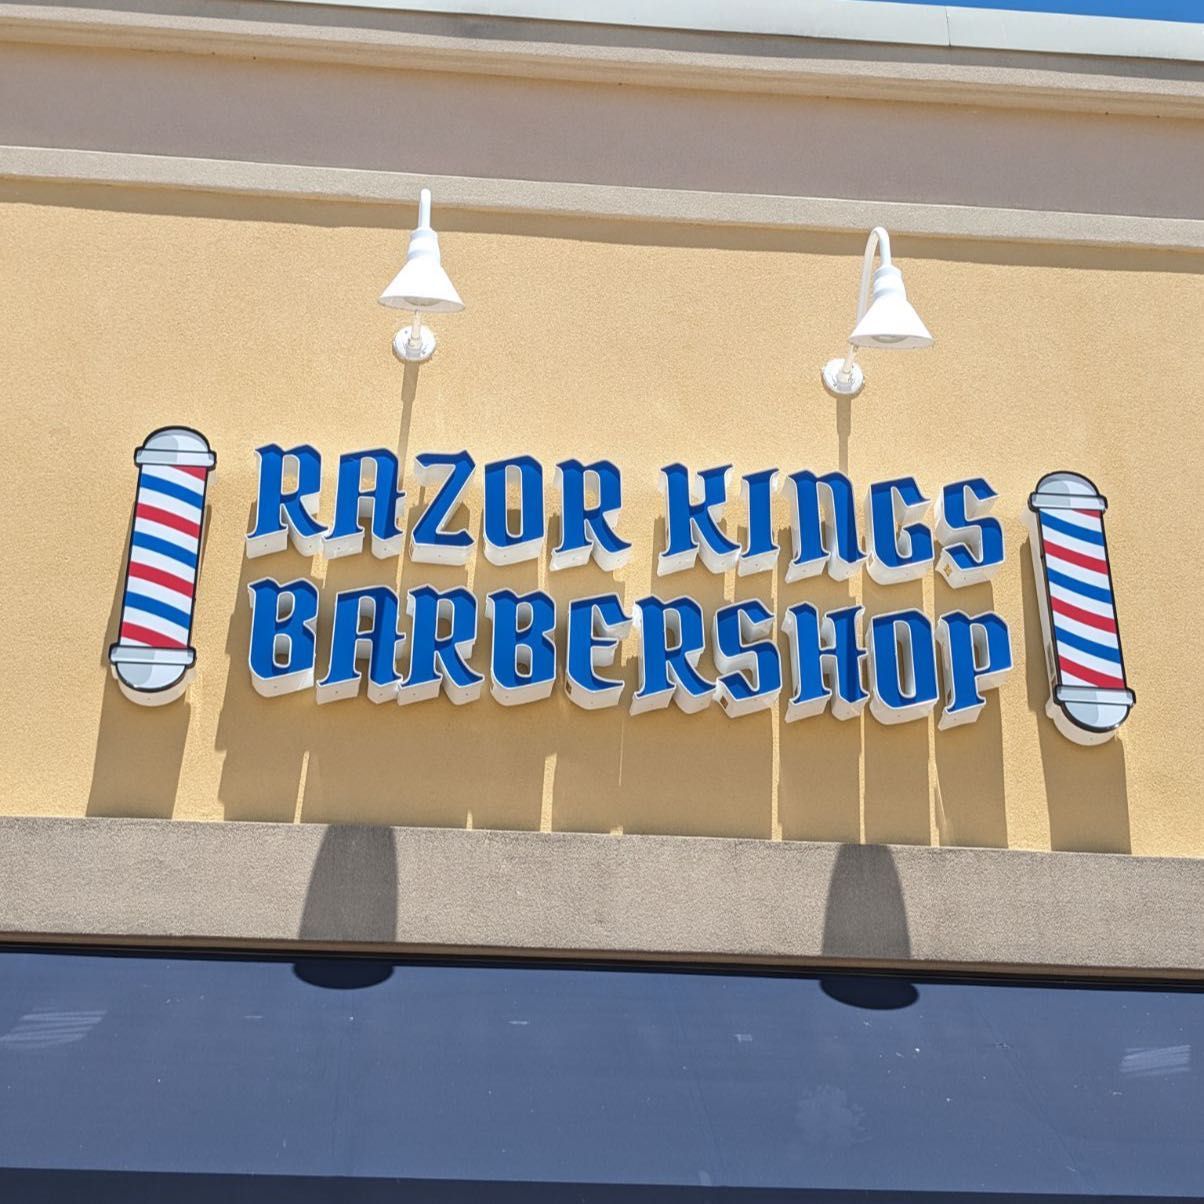 Razor Kings barbershop, 6200 grand river boulevard E, 442, Leeds, 35094